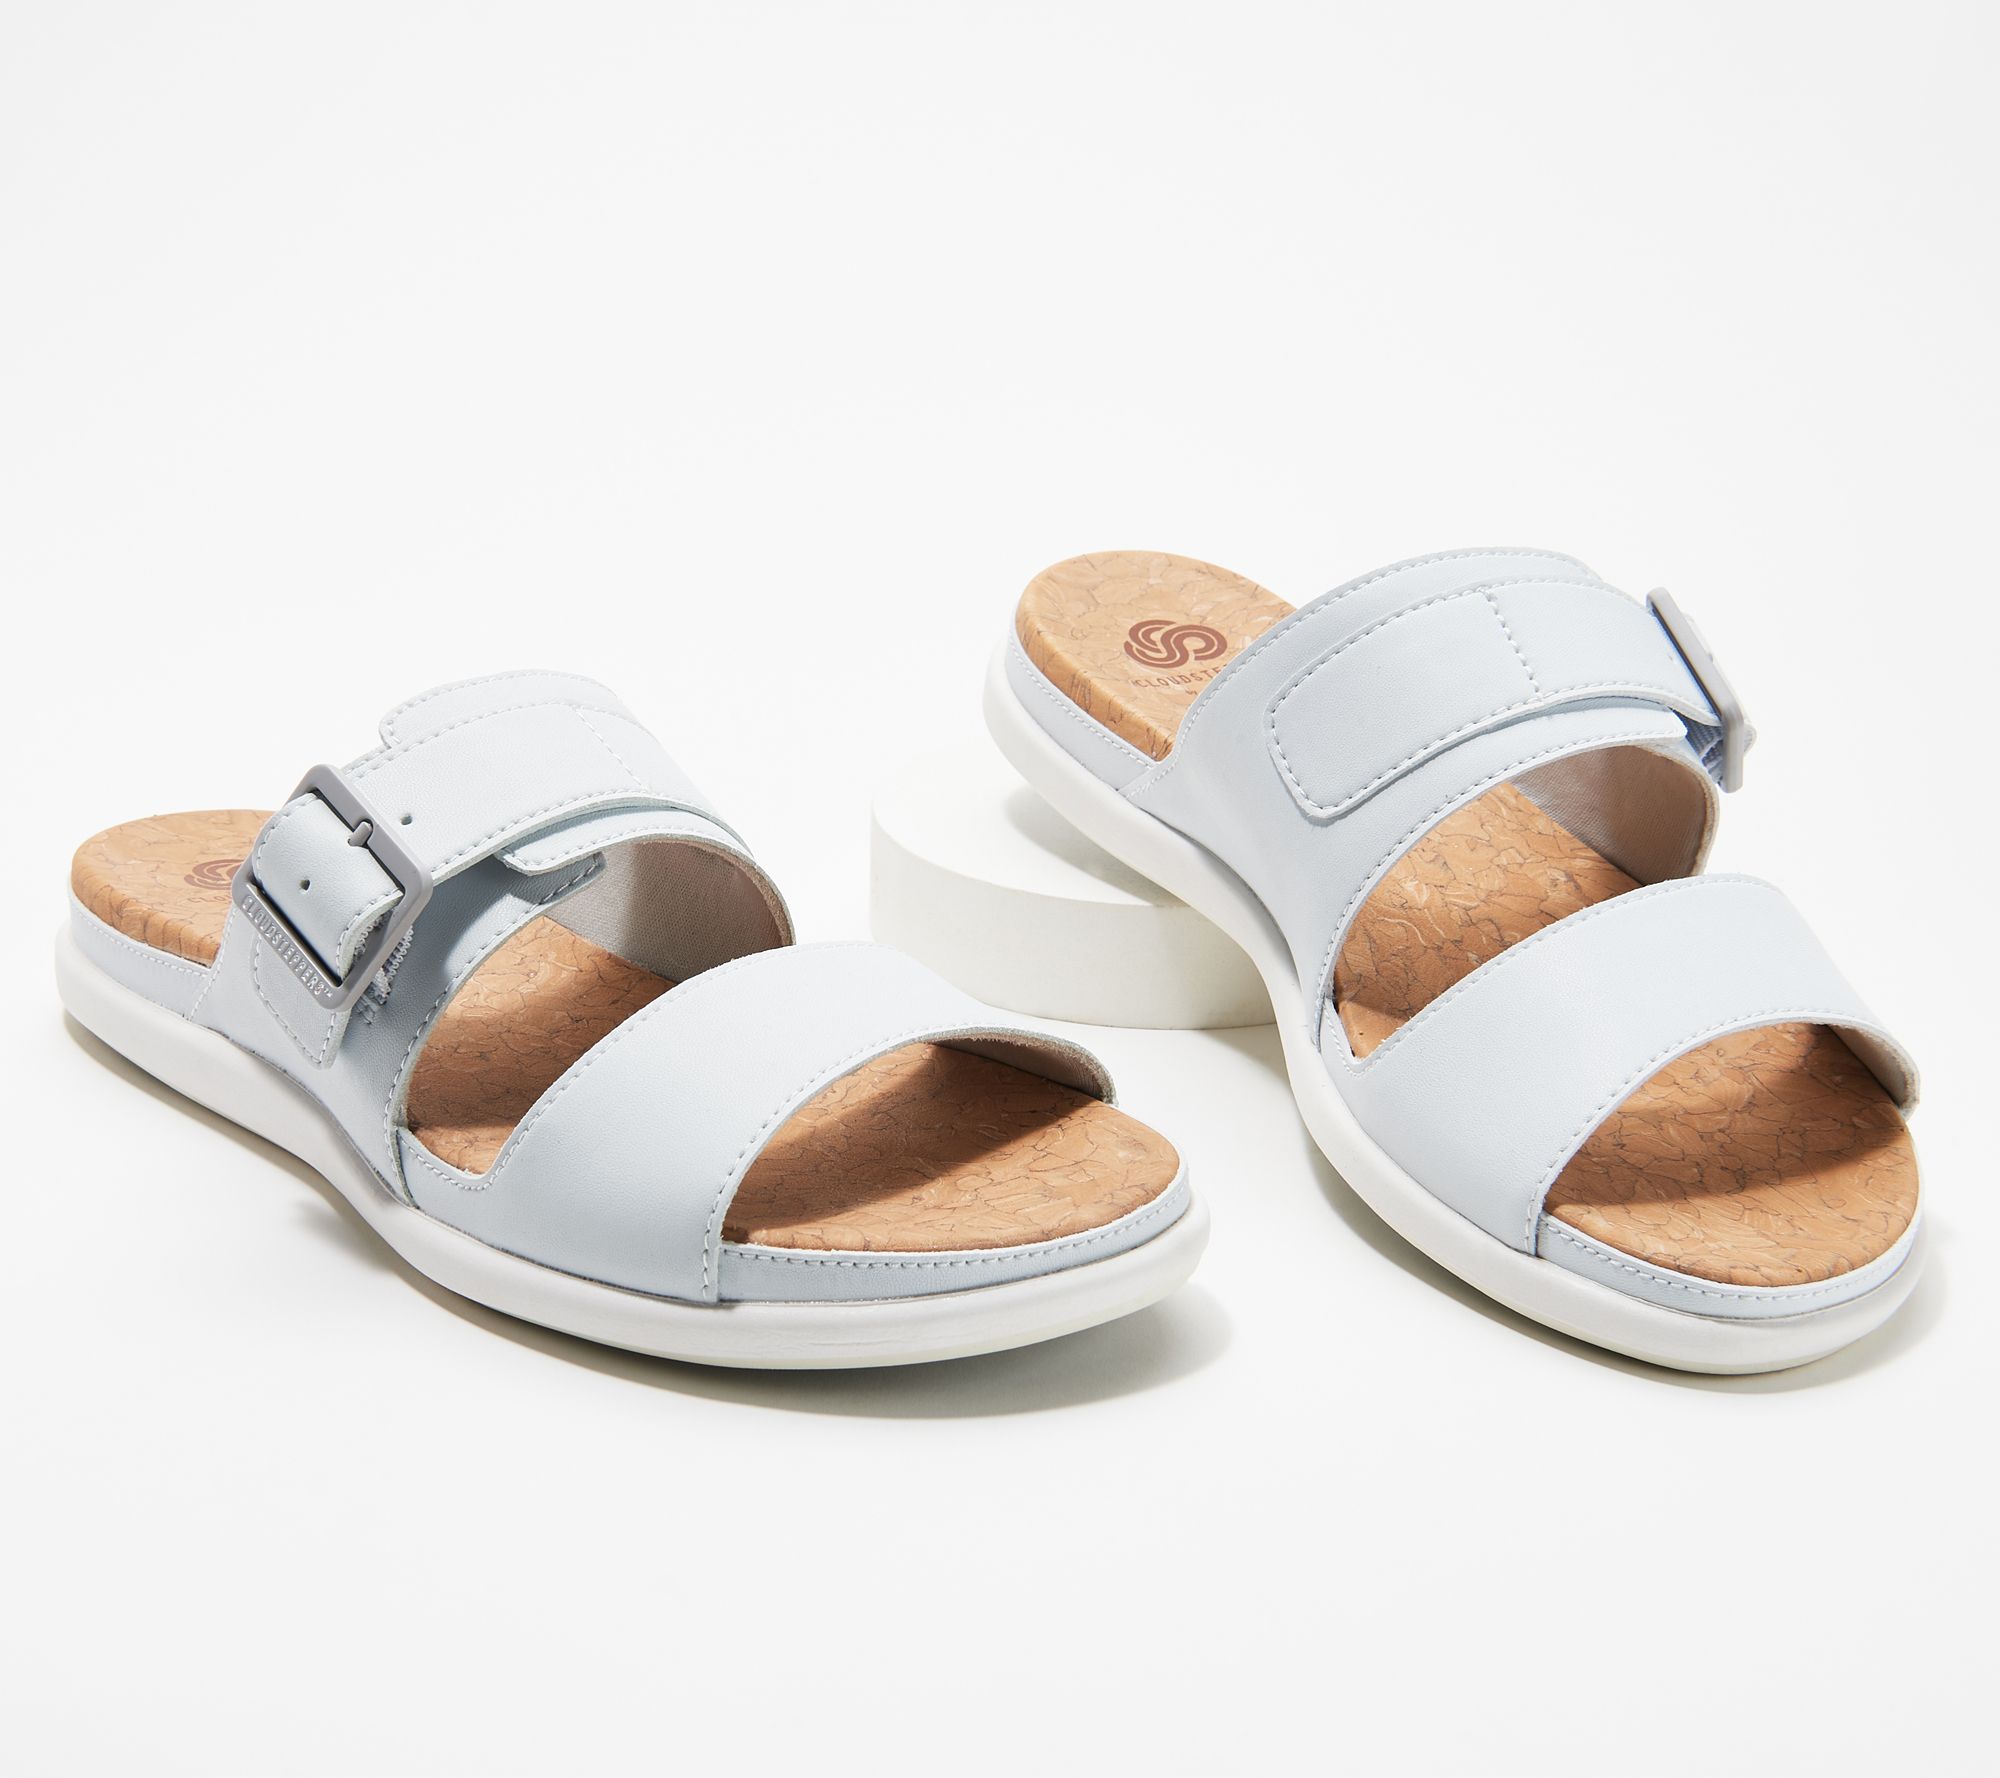 clarks slip on sandals cheap online